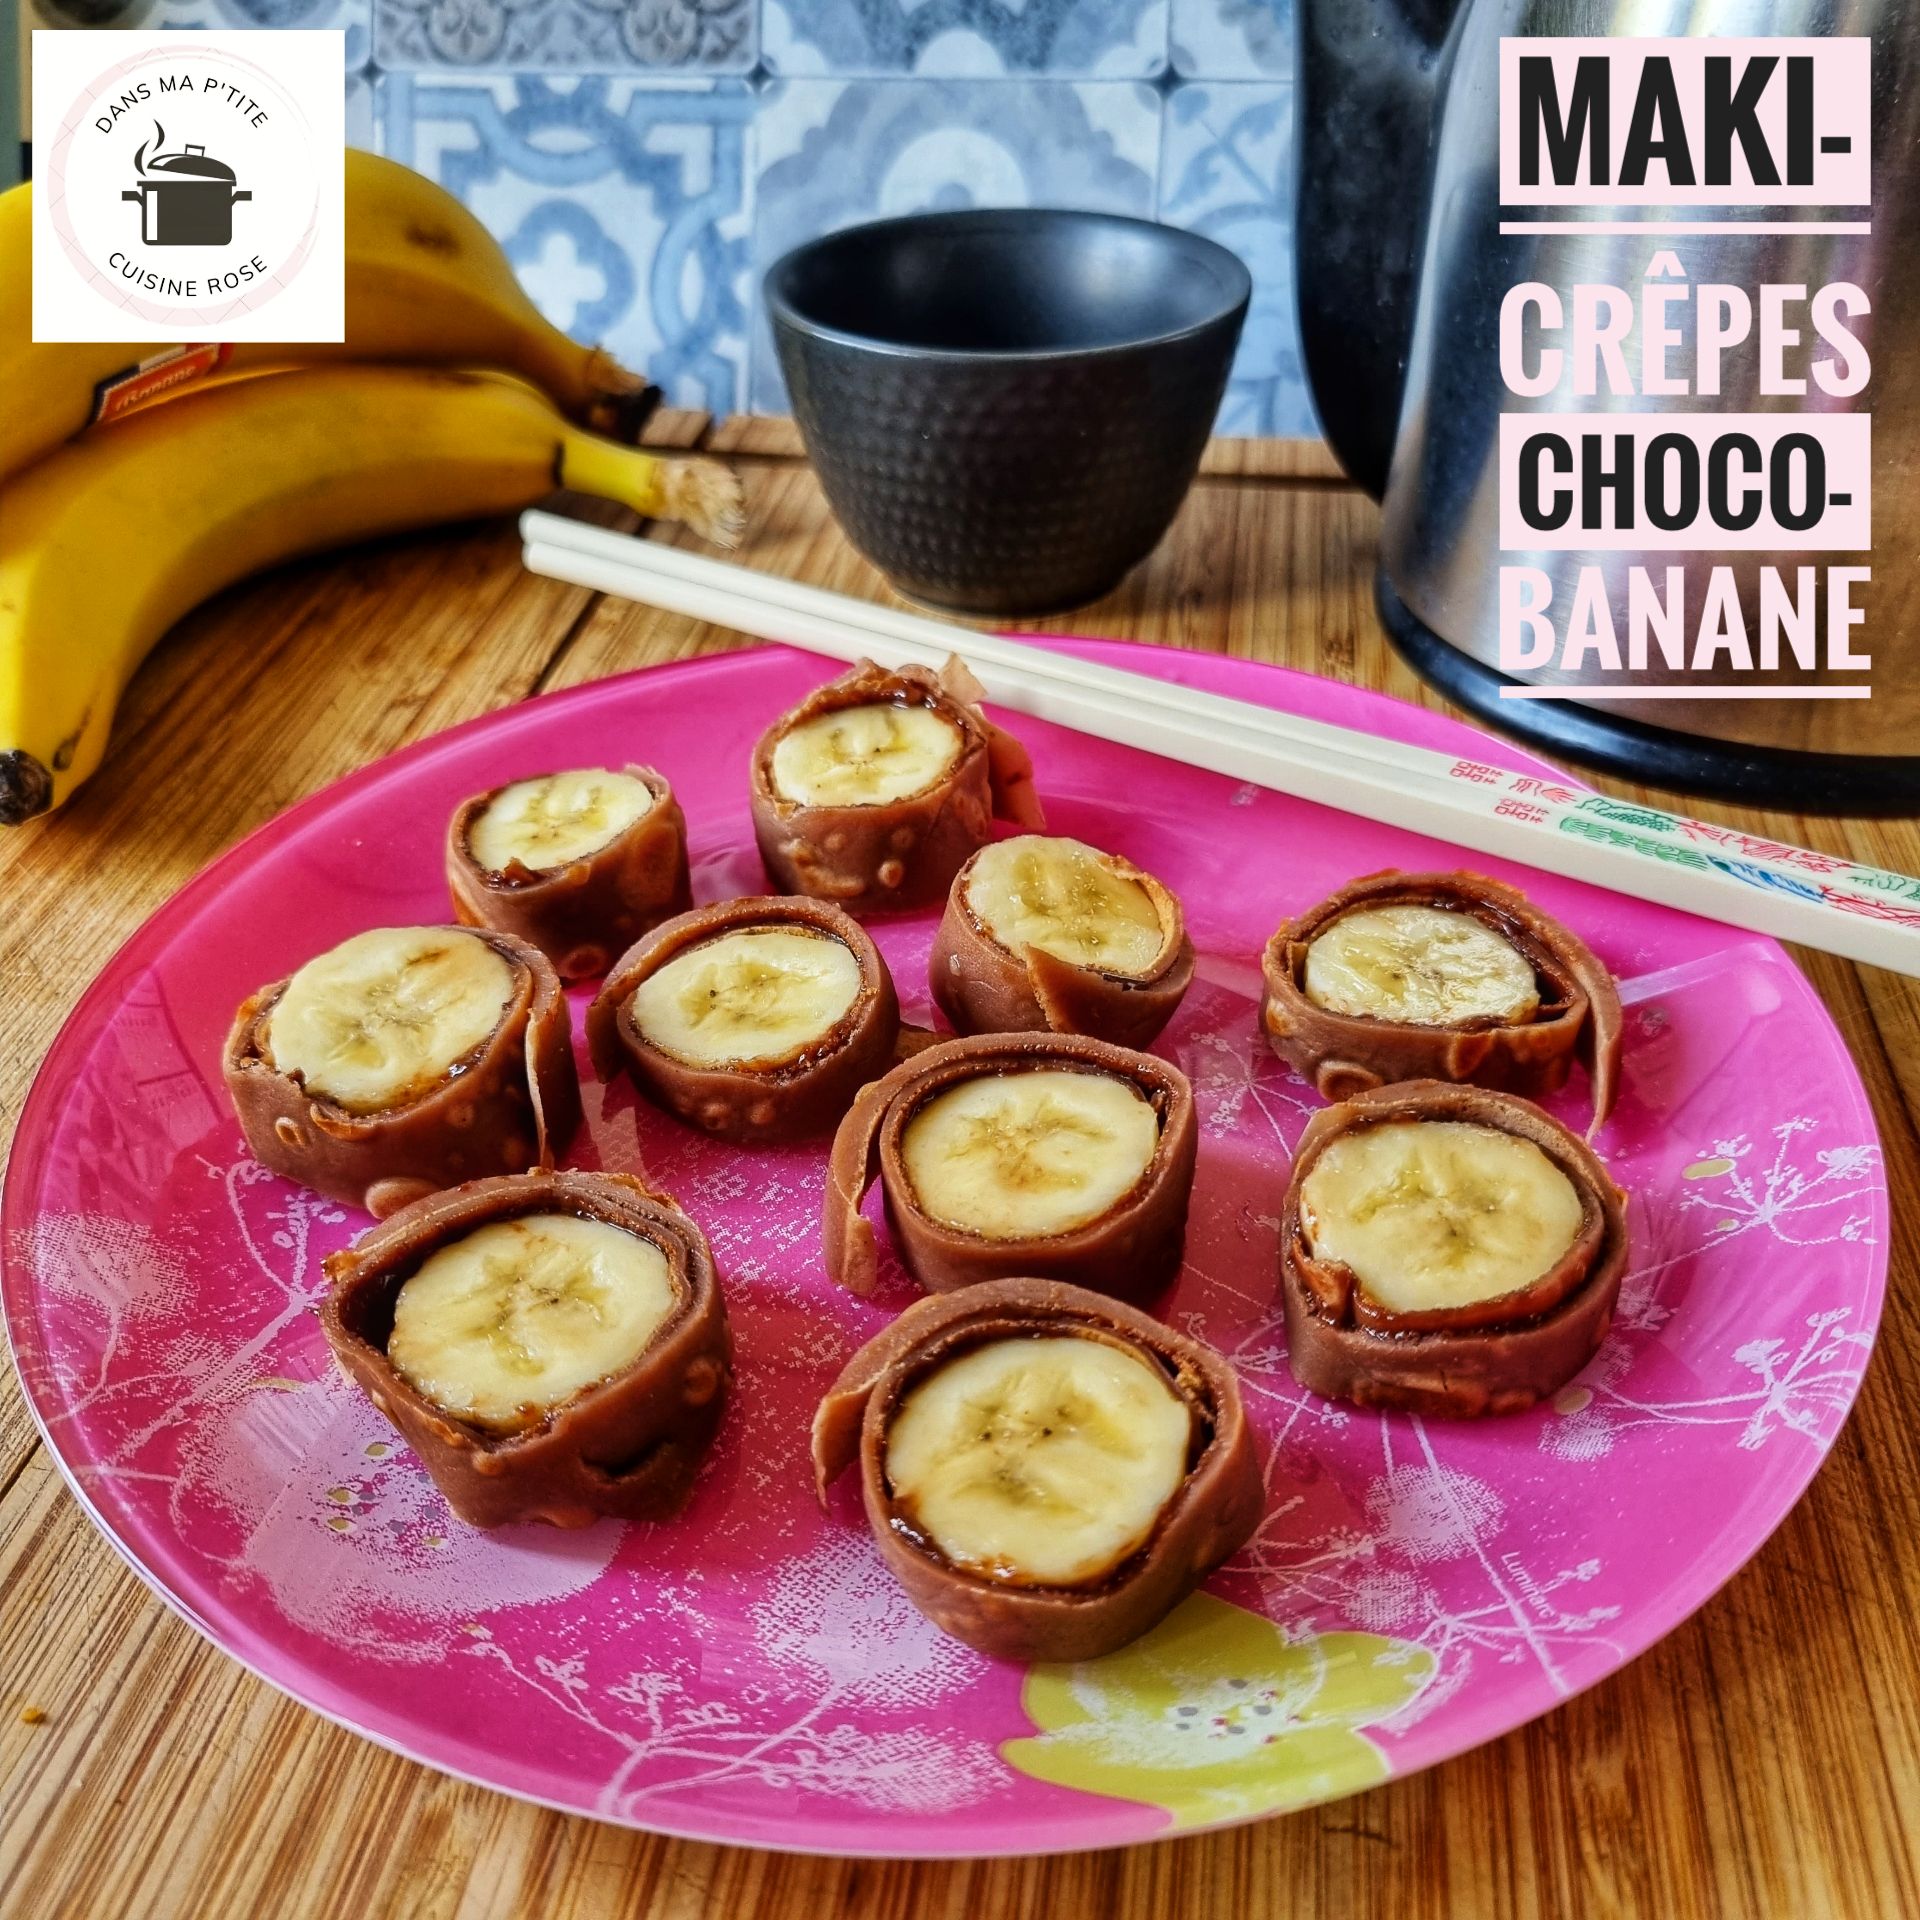 Maki-crêpes choco-banane (au Companion ou non)